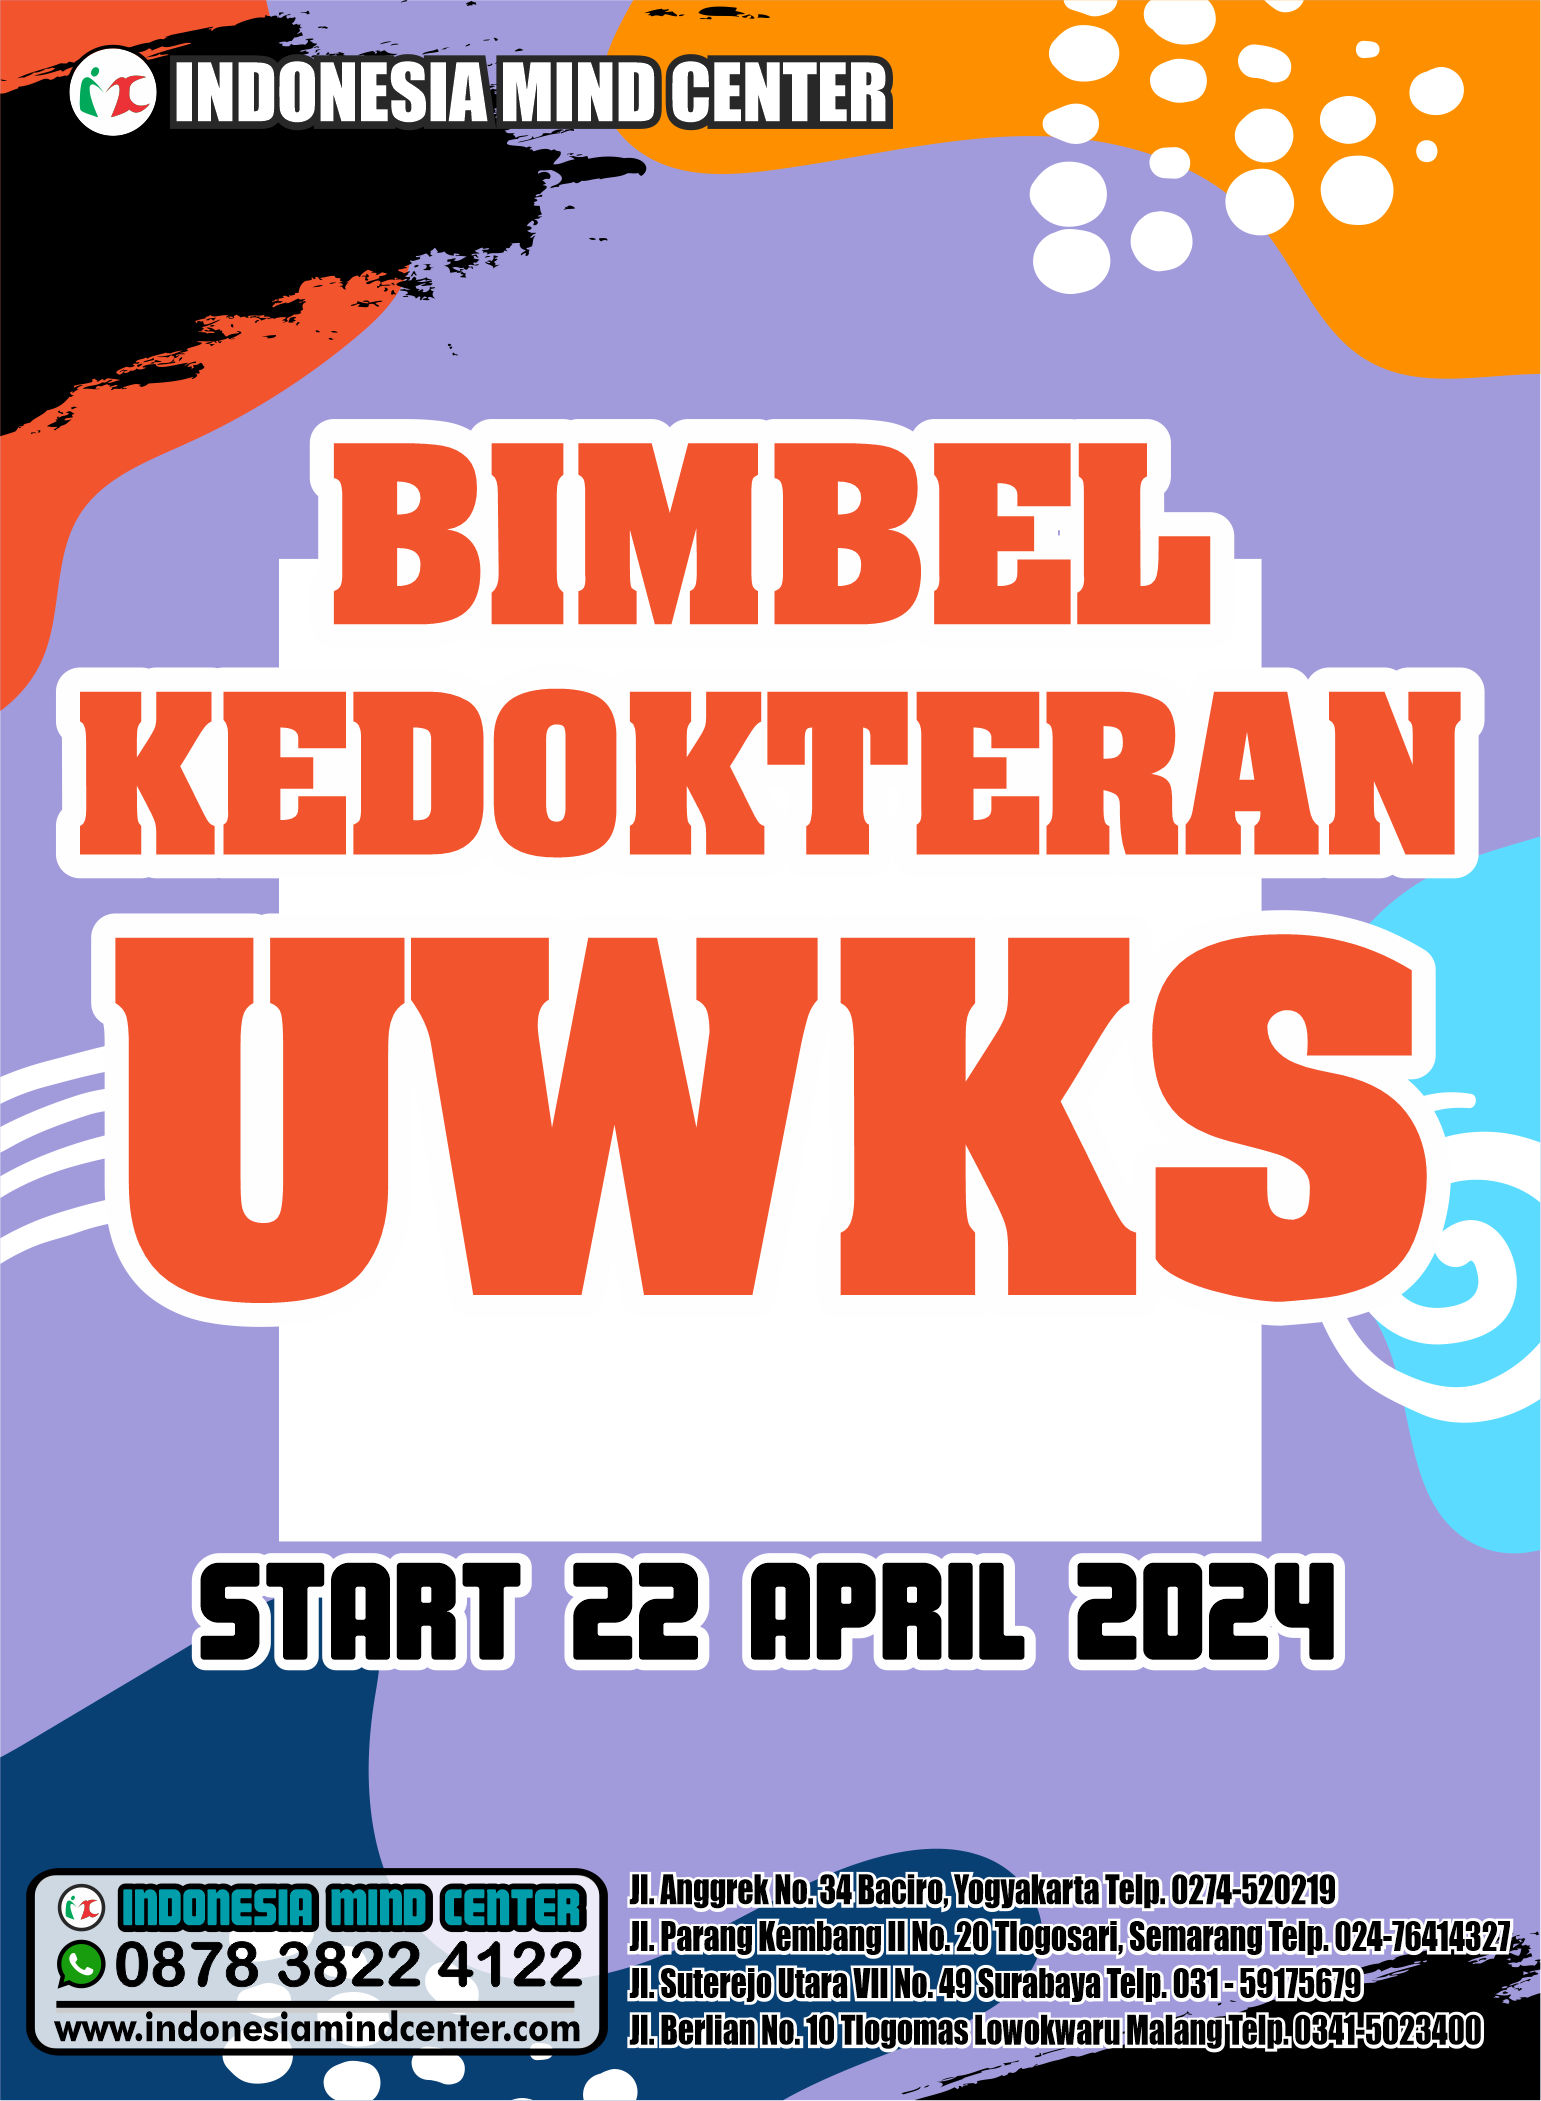 BIMBEL KEDOKTERAN UWKS START 22 APRIL 2024